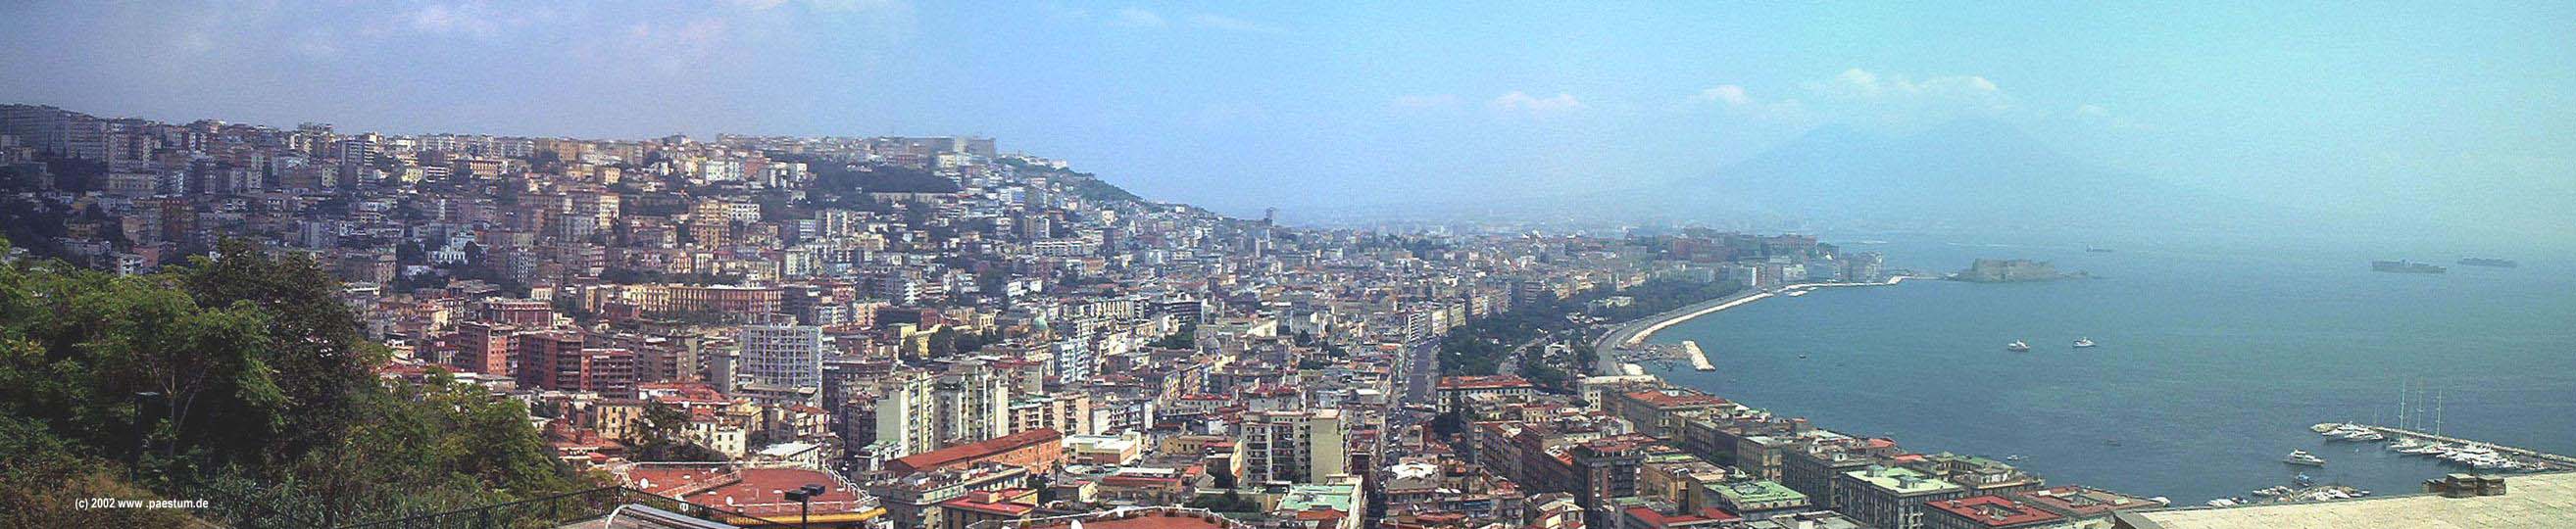 Neapel Panorama Posillipo